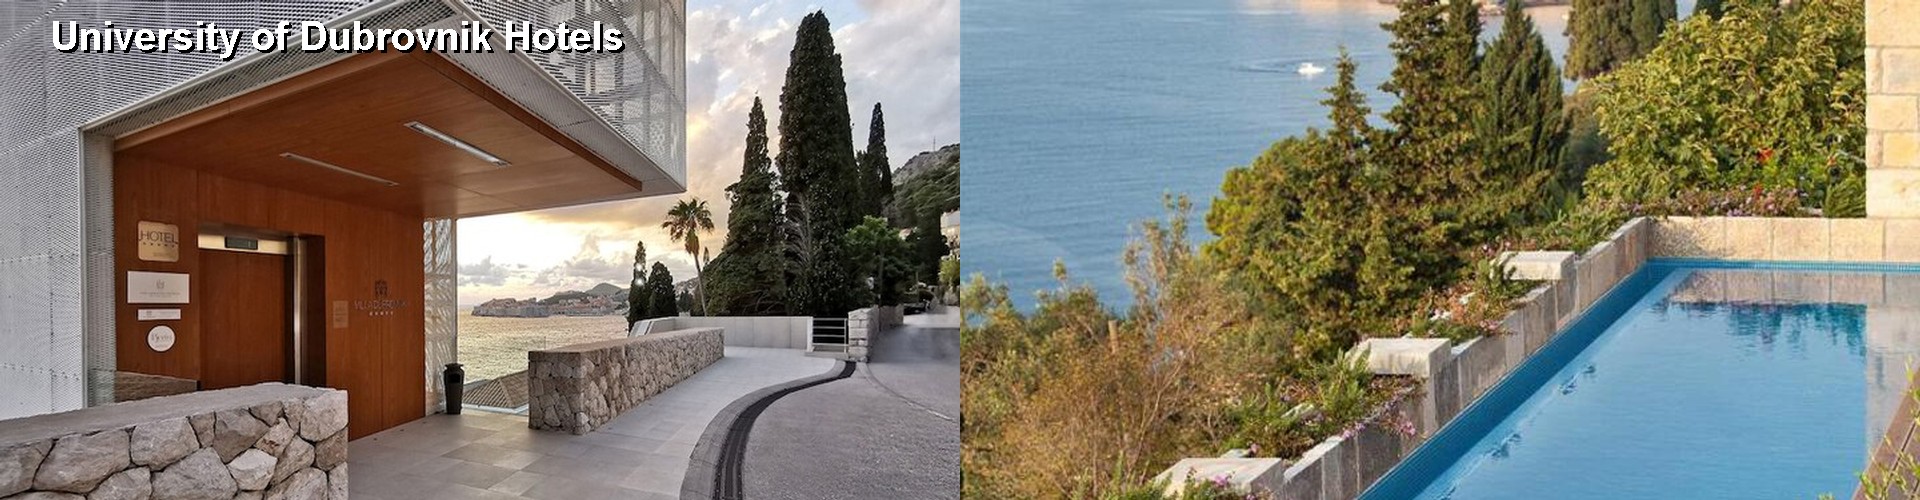 5 Best Hotels near University of Dubrovnik